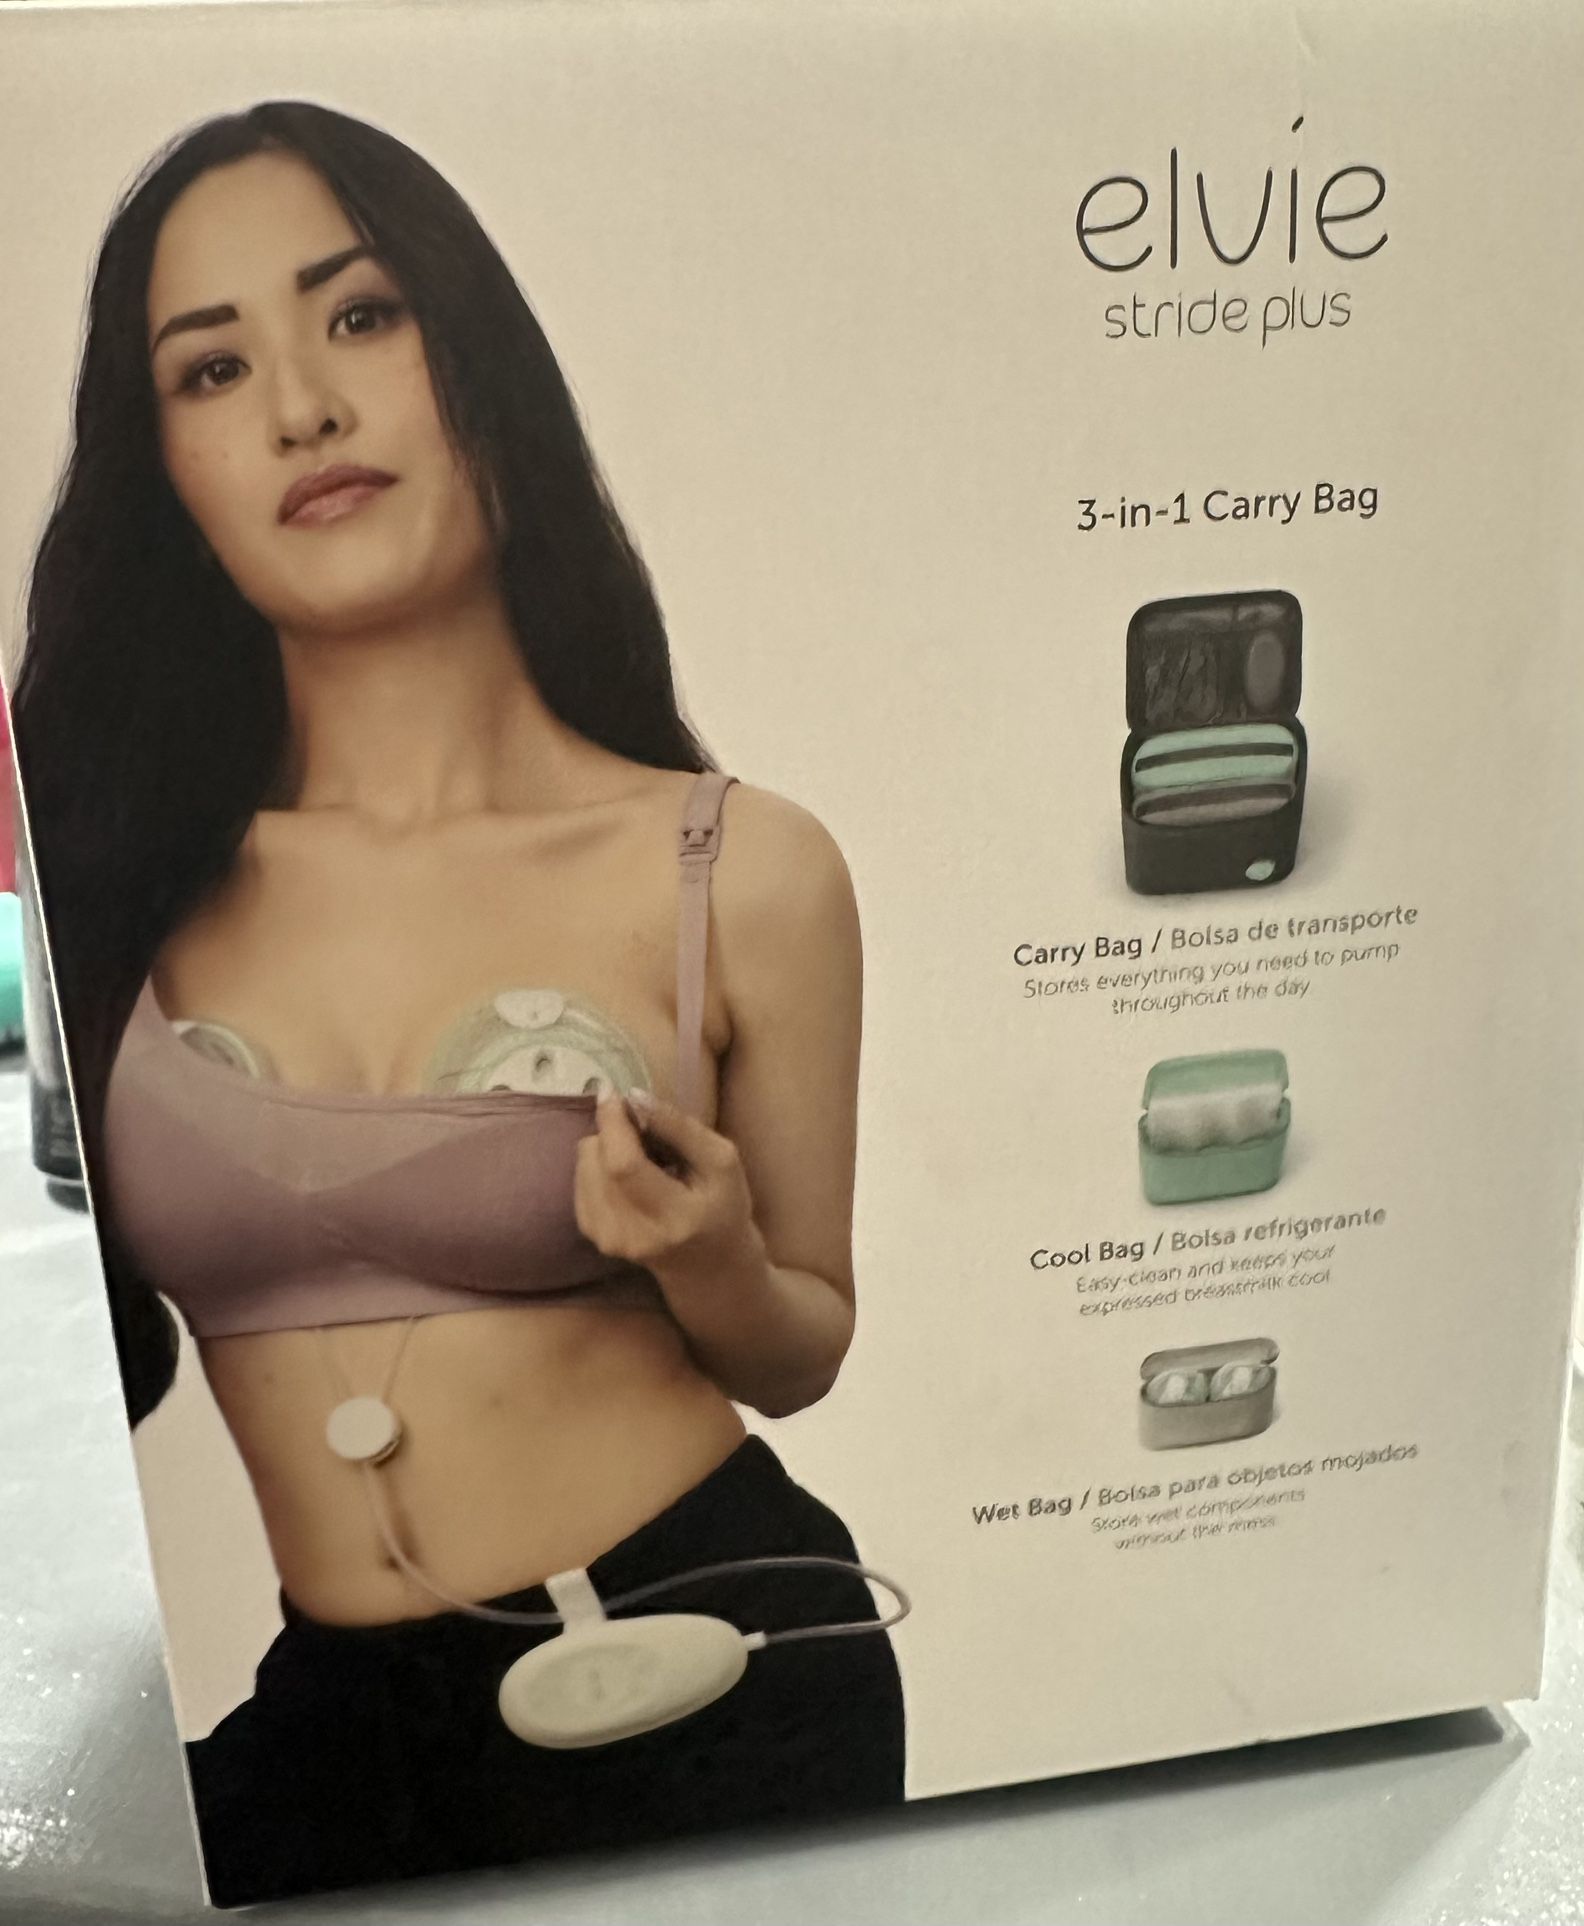 New In Box Elvie Breast Pump for Sale in Kirkland, WA - OfferUp